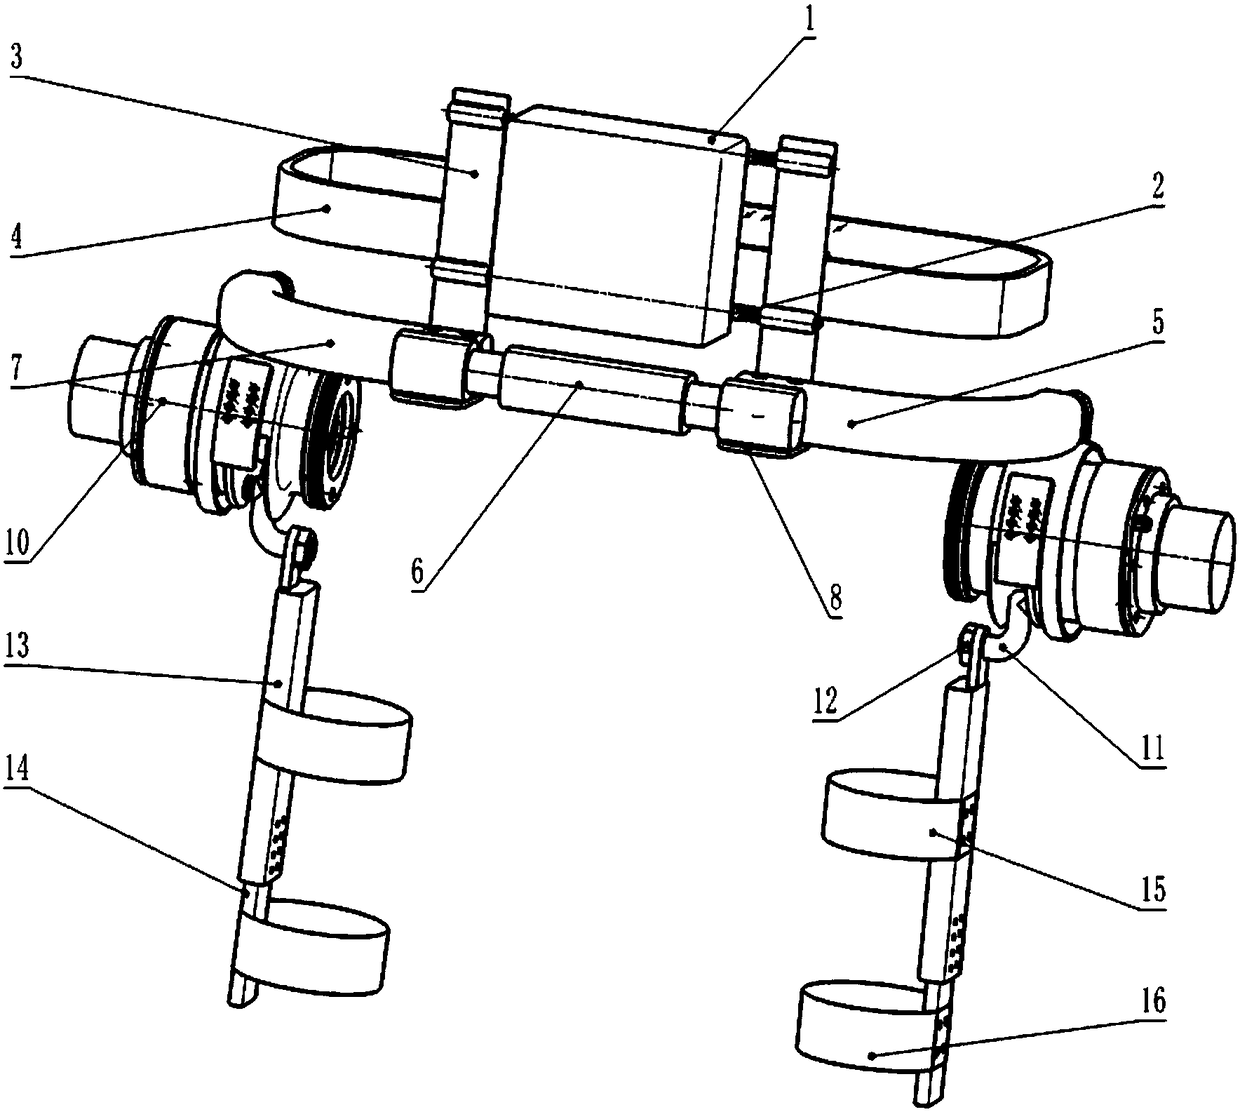 A portable hip assist mechanism